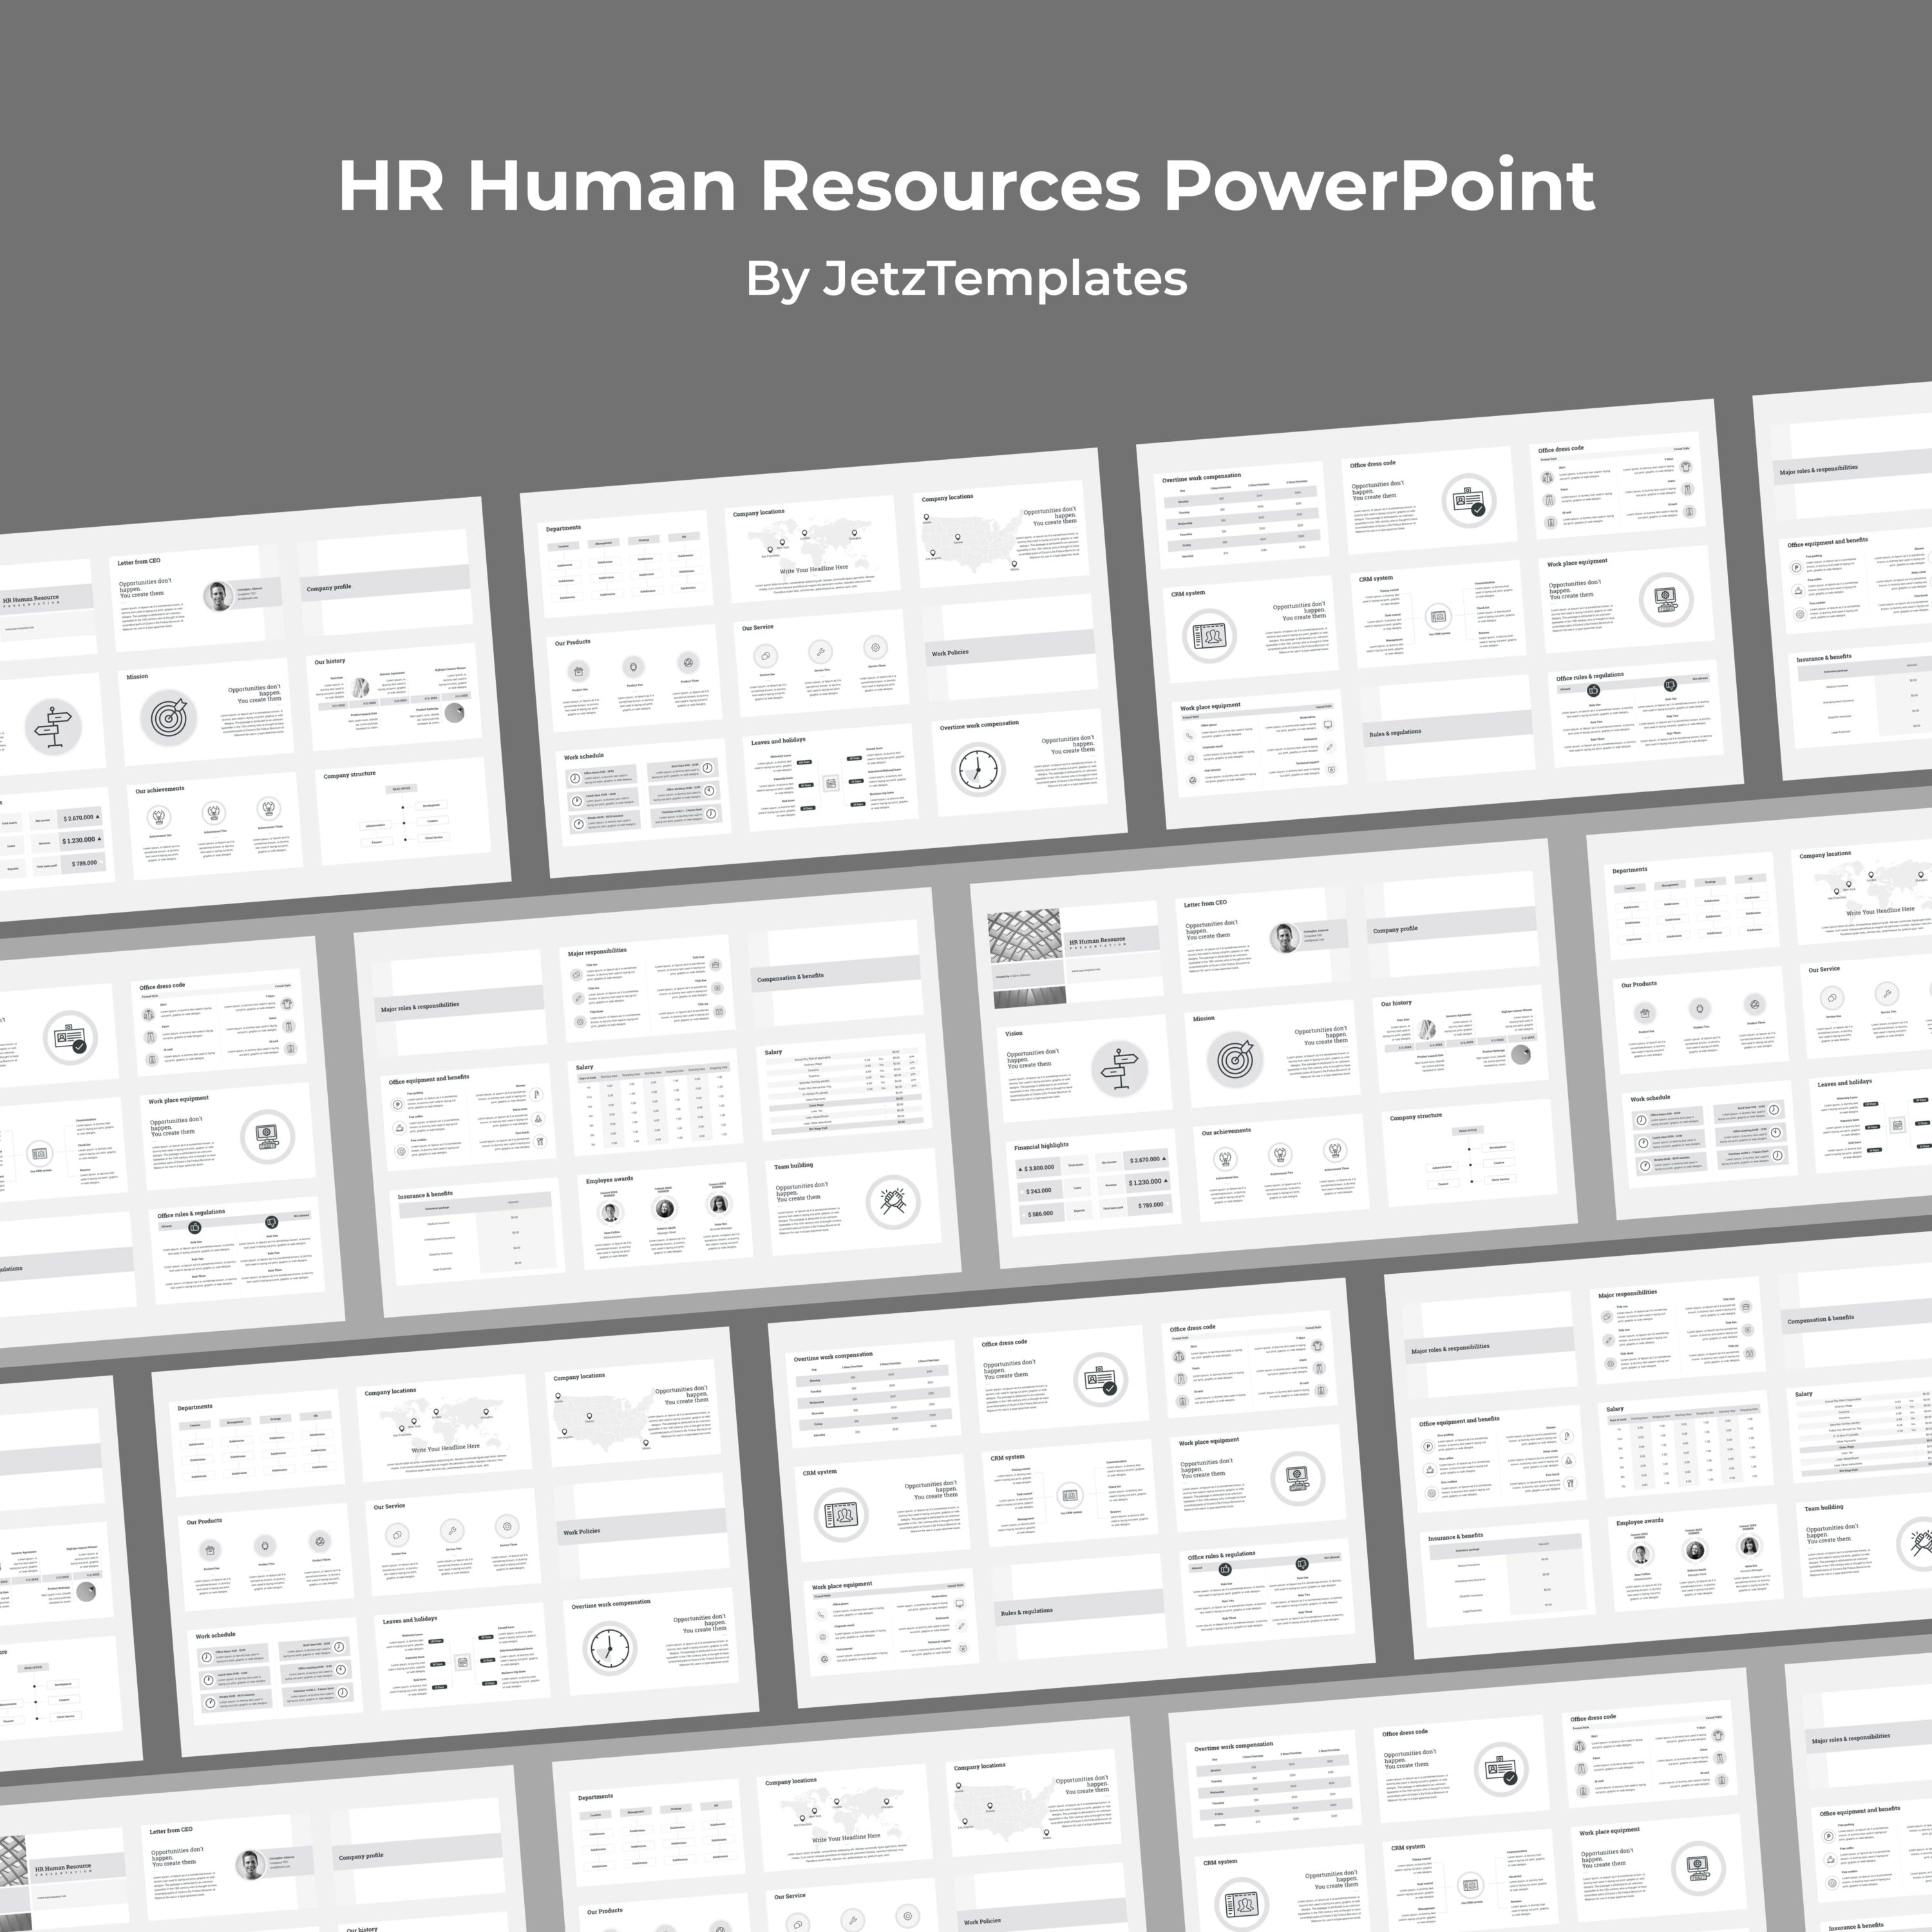 HR Human Resources PowerPoint.